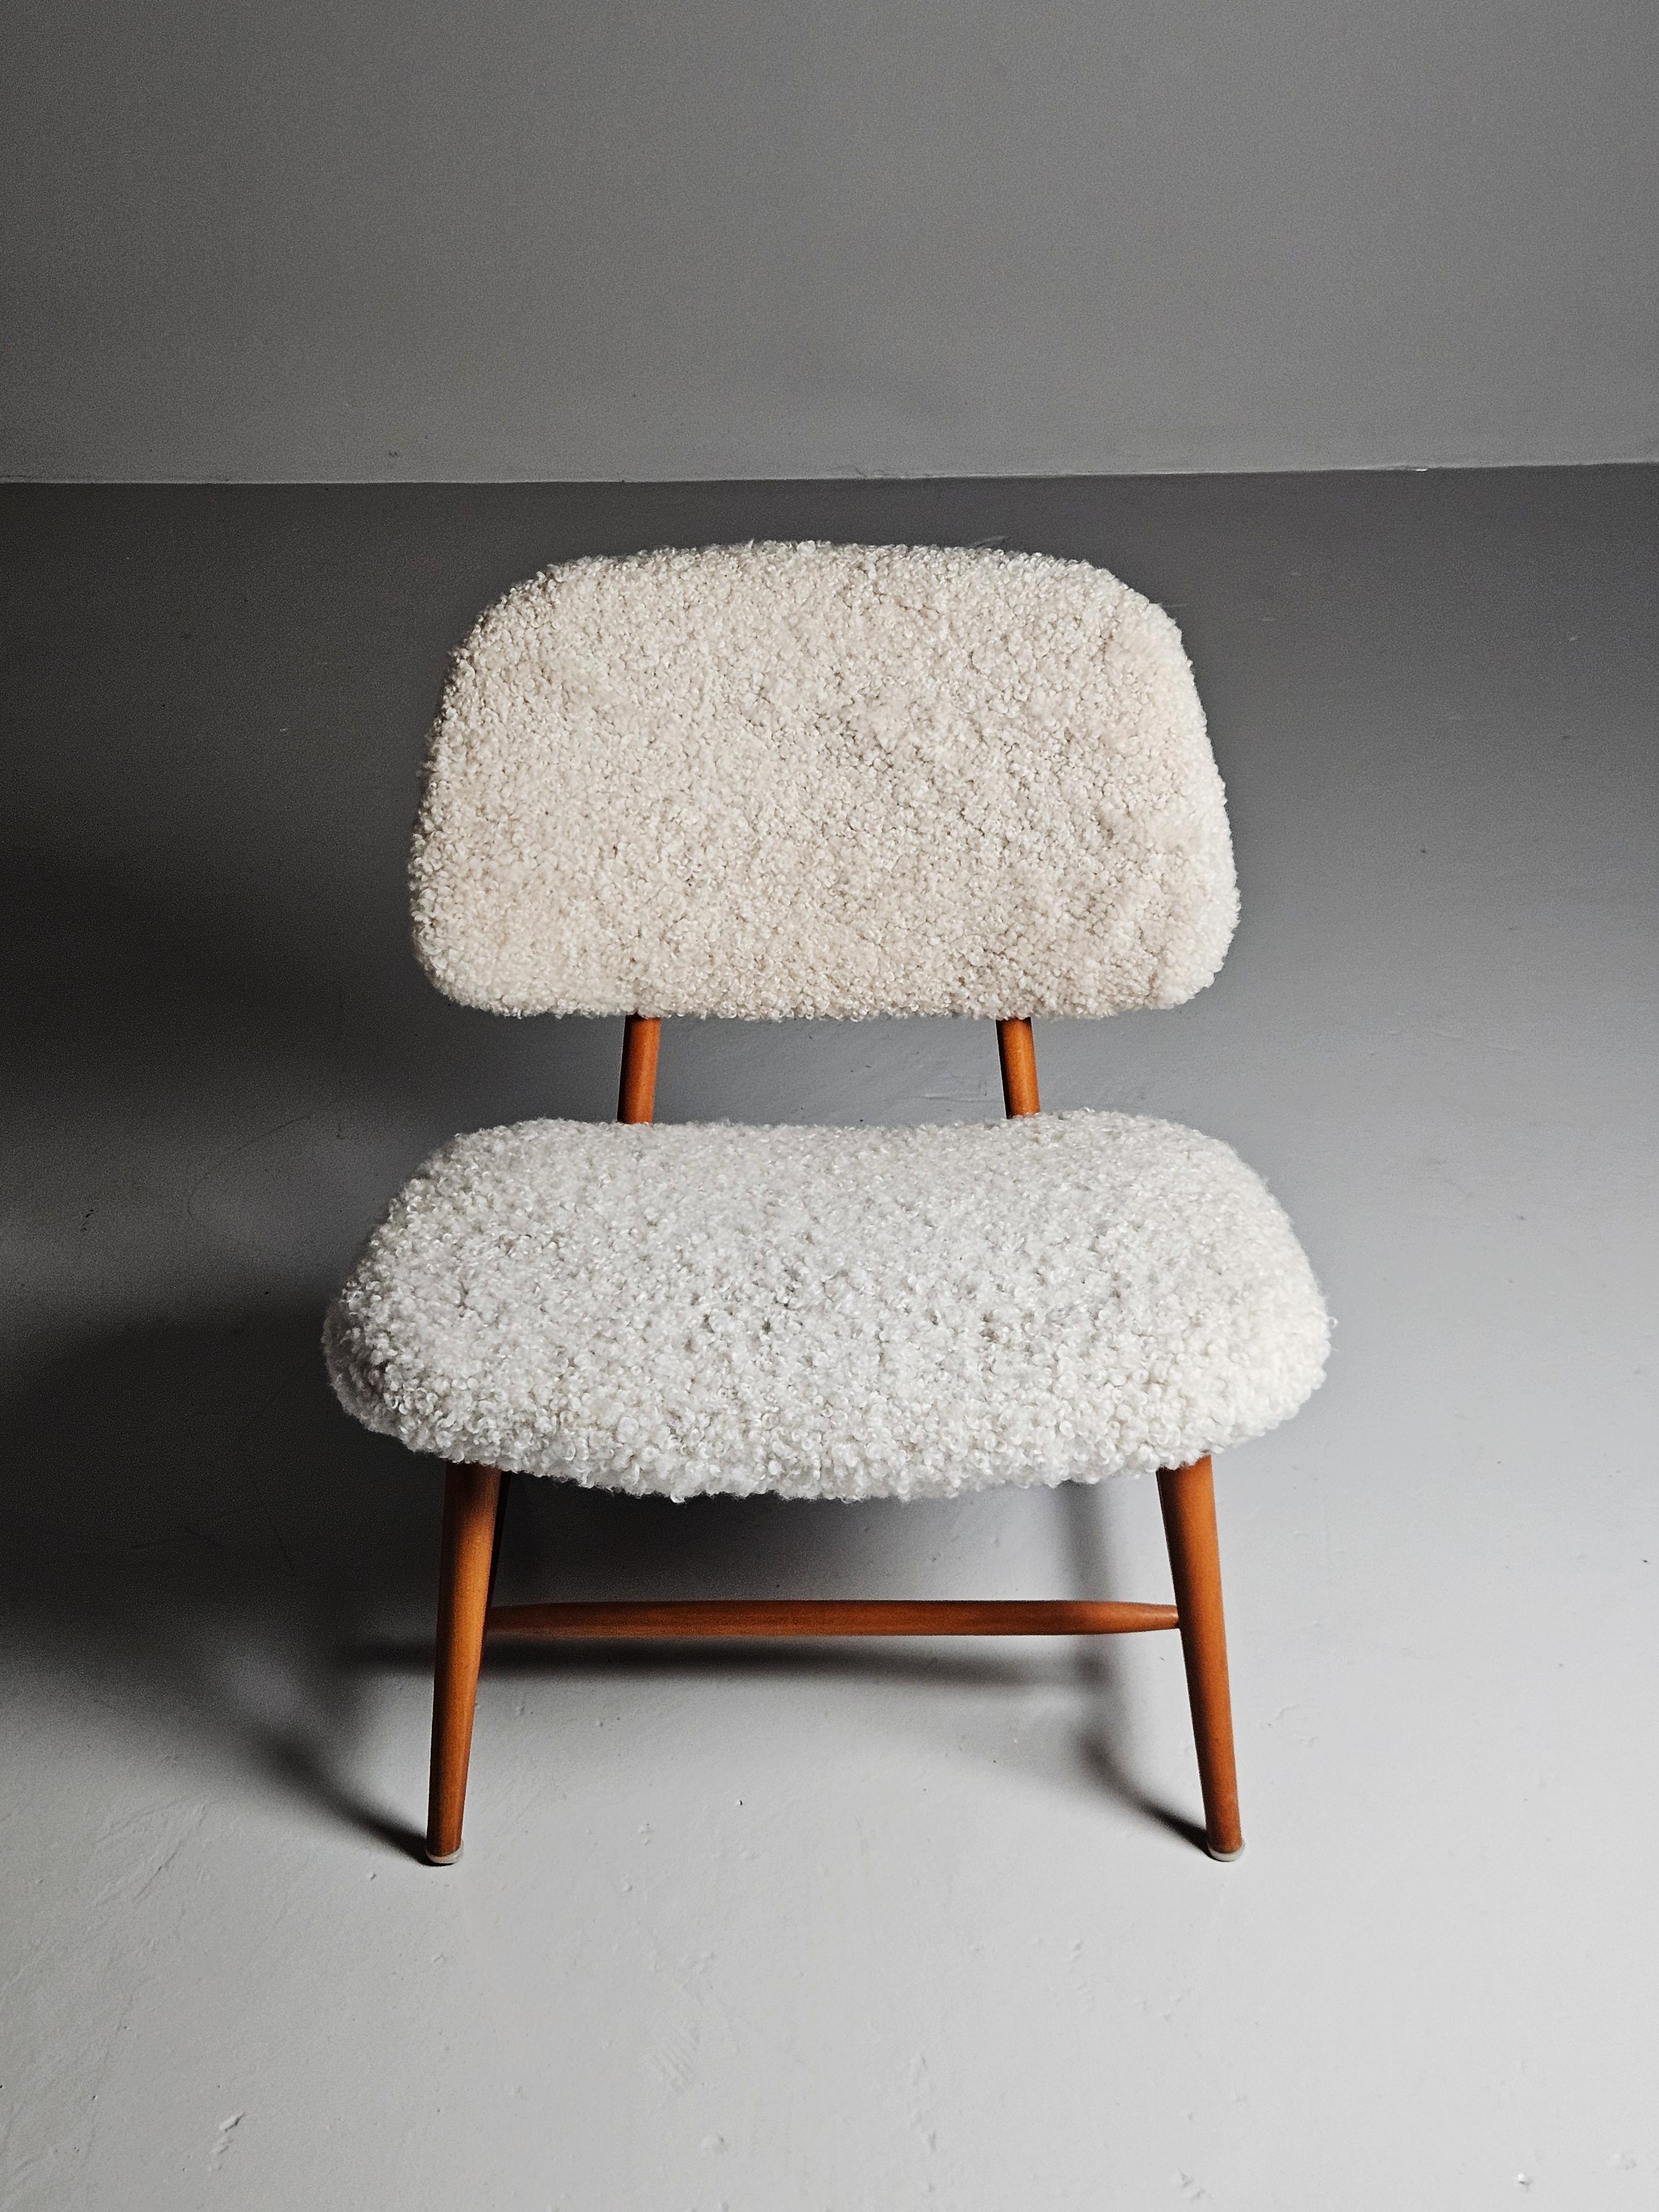 20th Century Scandinavian modern 'Teve' chairs by Alf Svensson for Bra Bohag, Sweden, 1950s For Sale